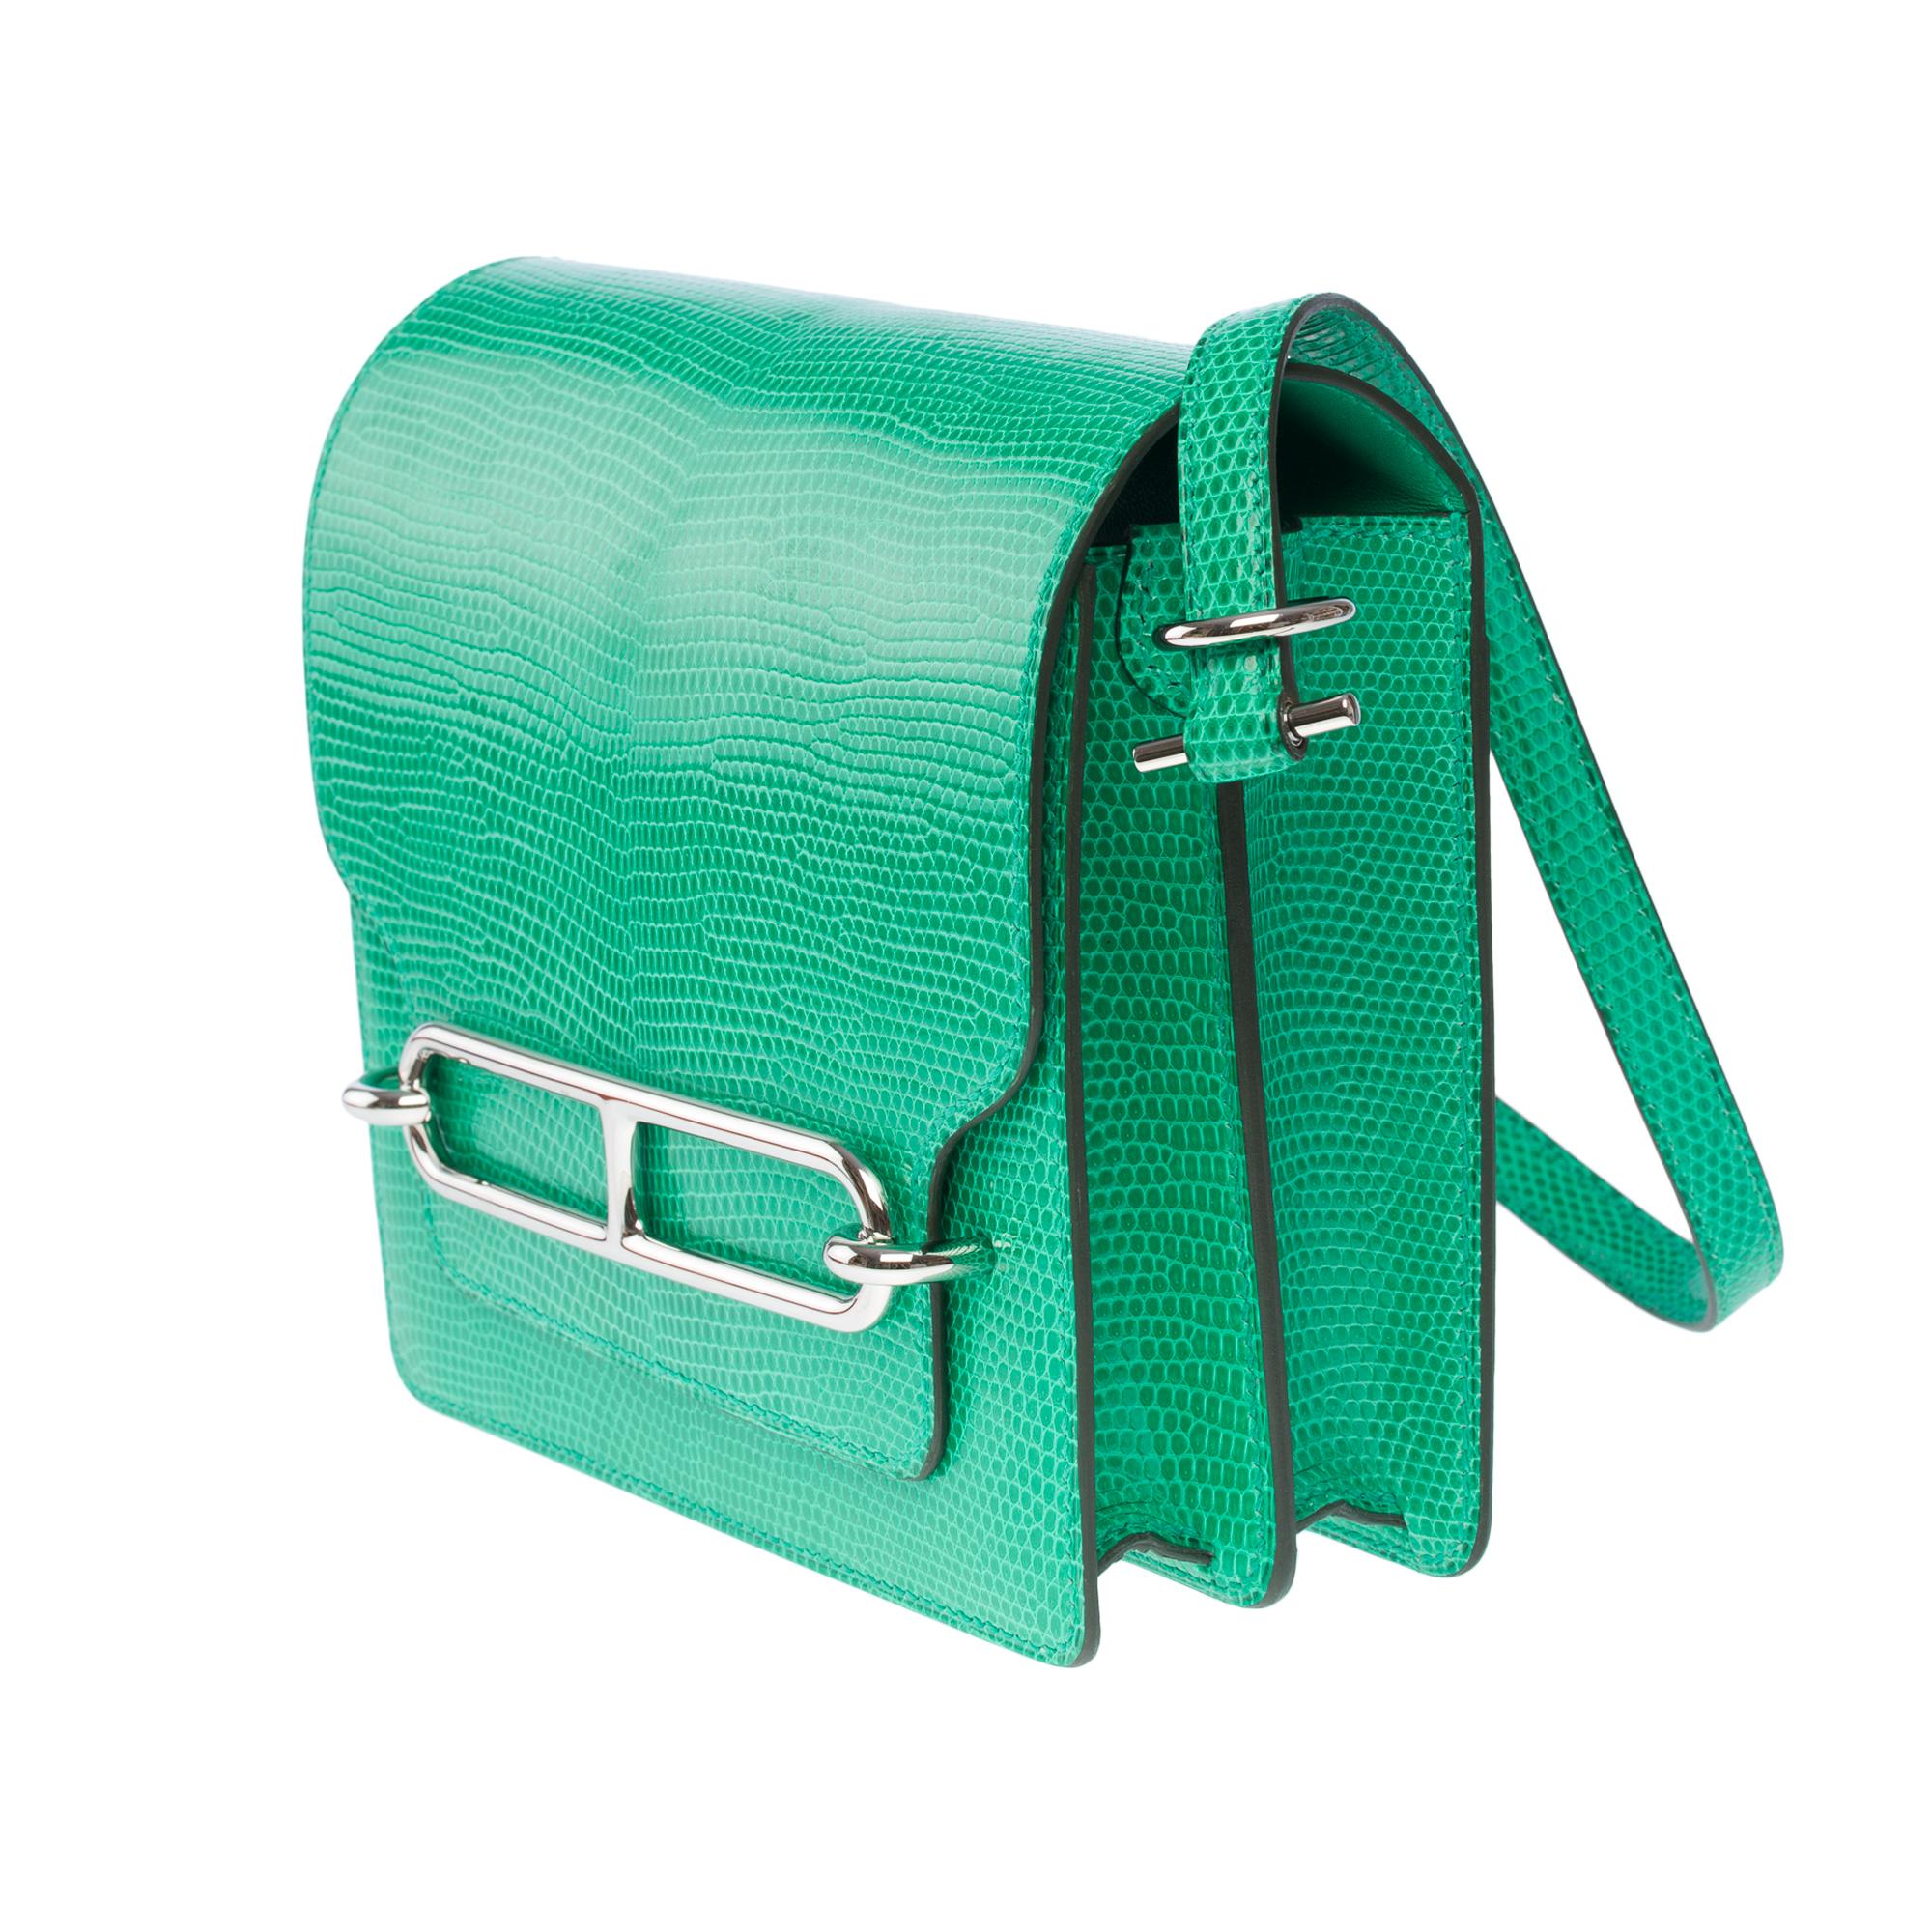 New Amazing Hermès Roulis 18 shoulder bag in mint green lizard, SHW For Sale 1